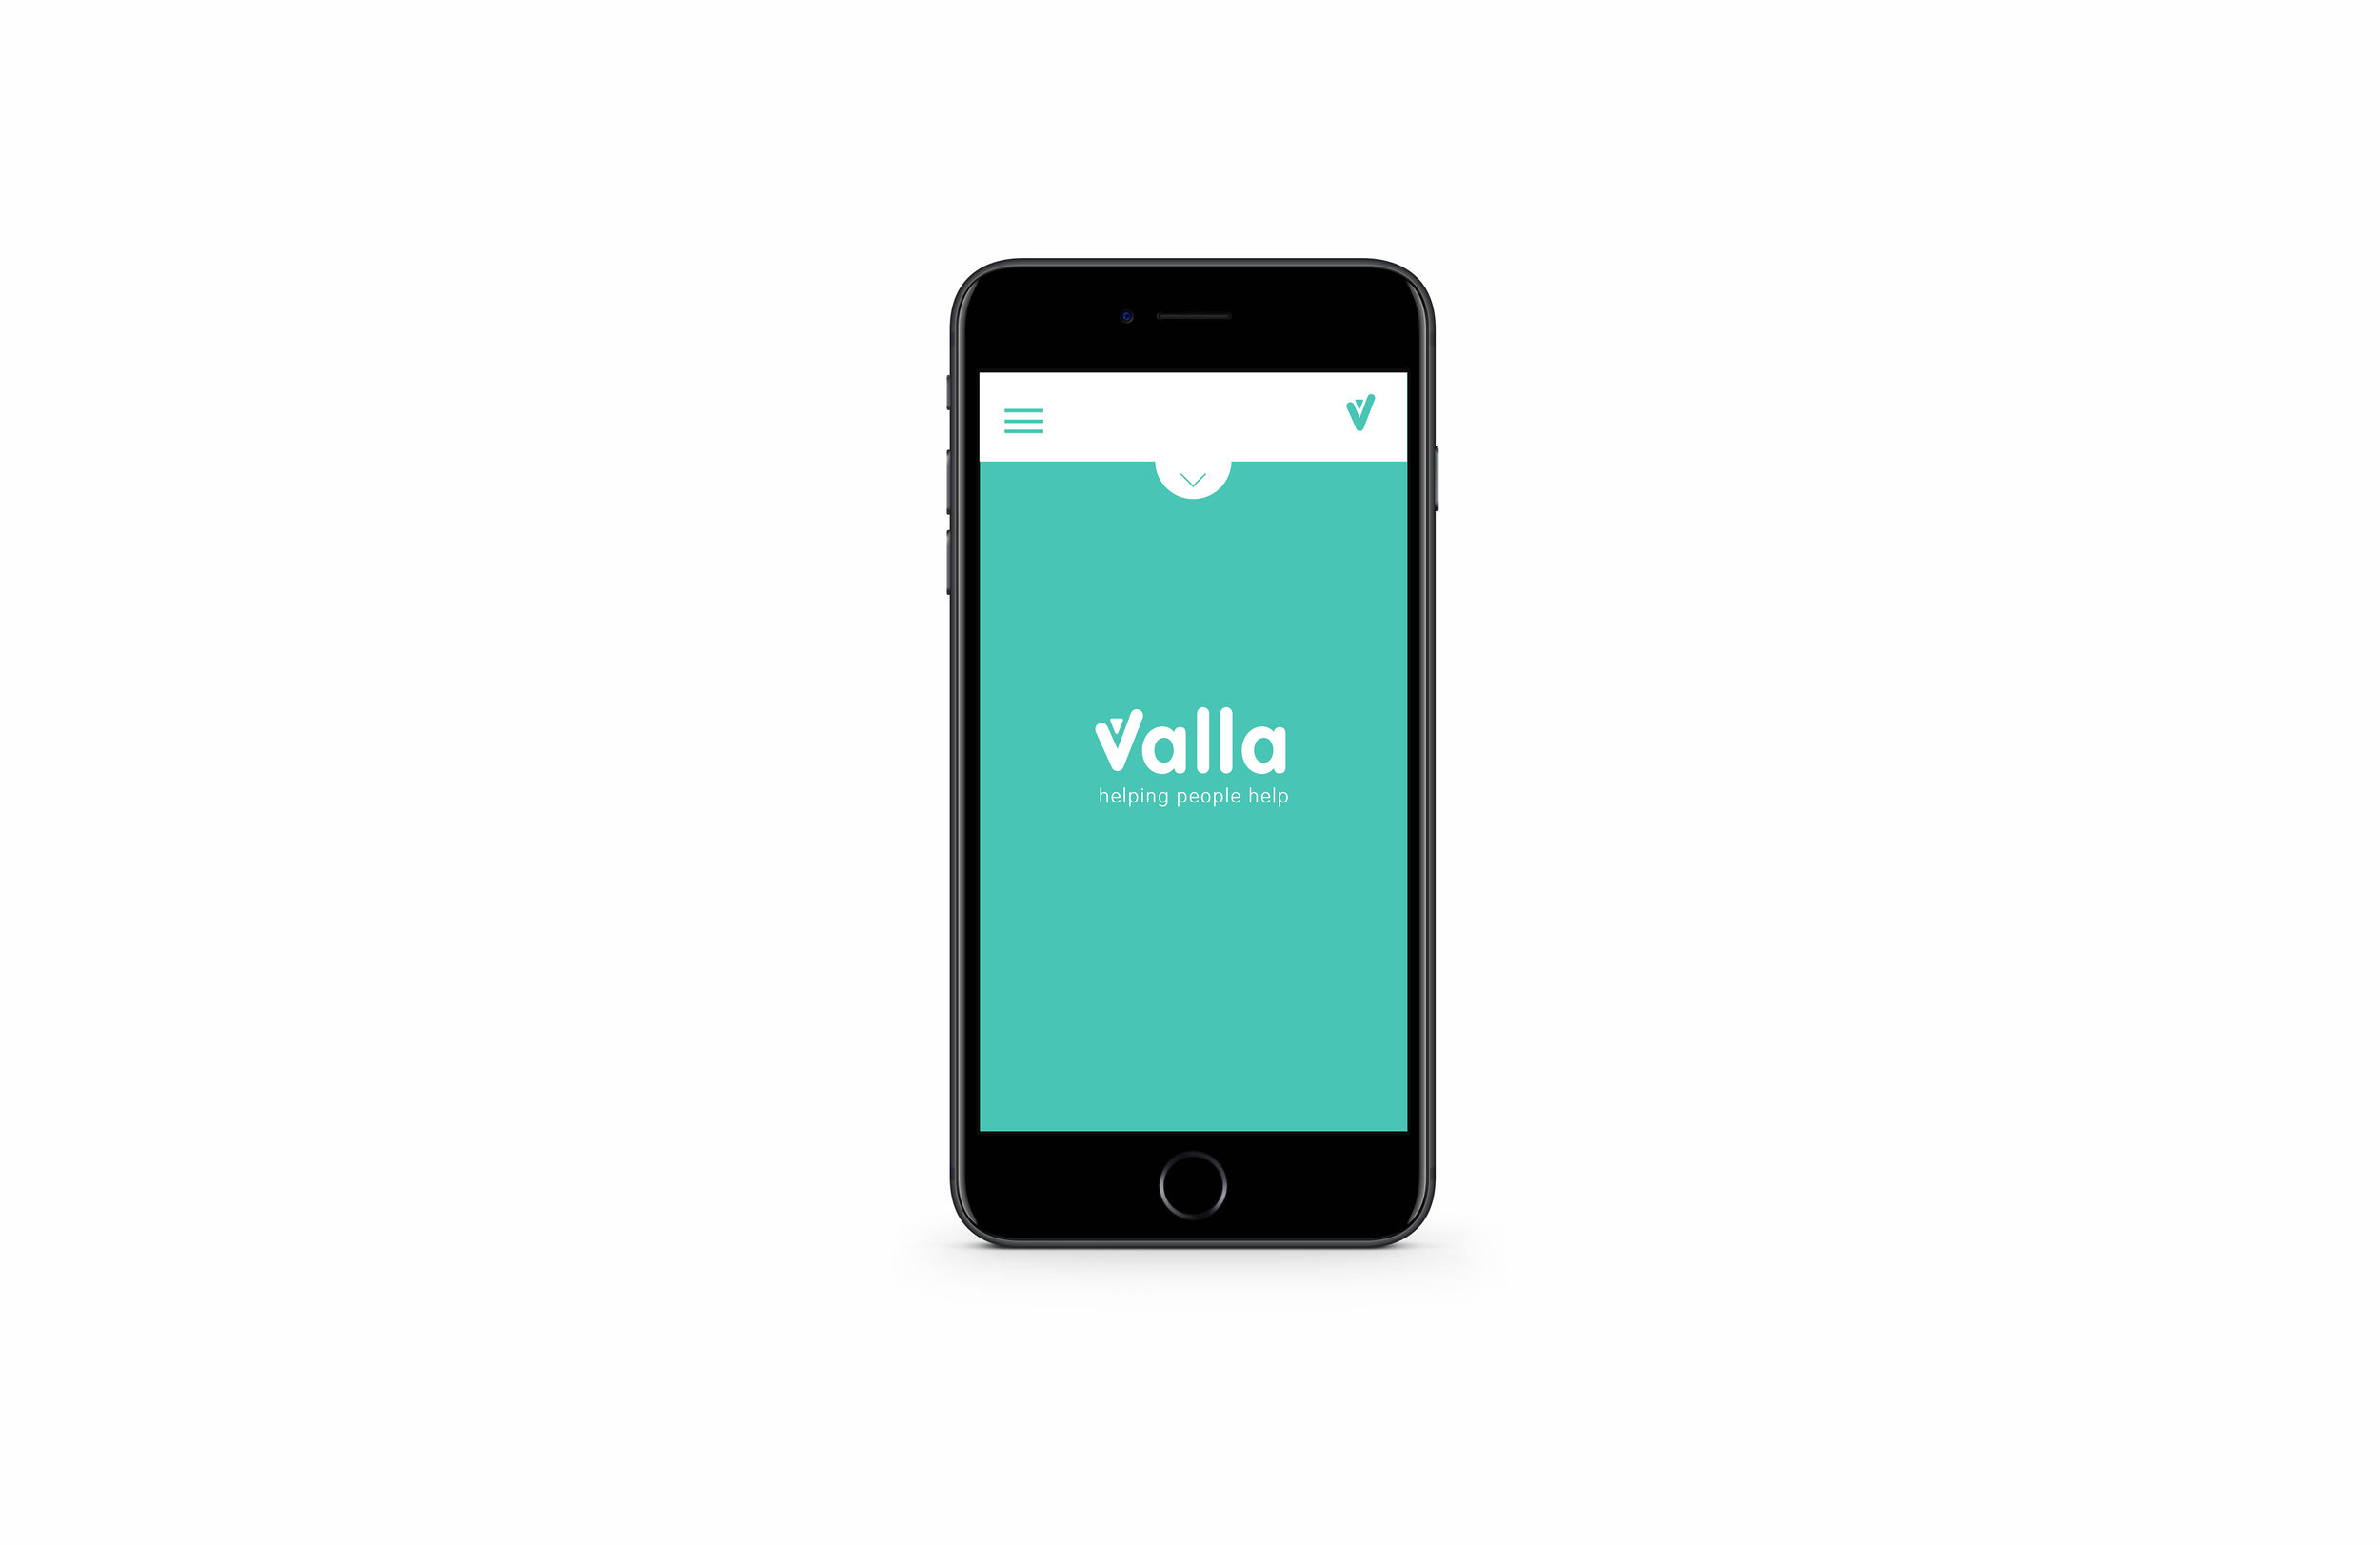 Web designer Leeds. An Apple iPhone showing Valla user interface design